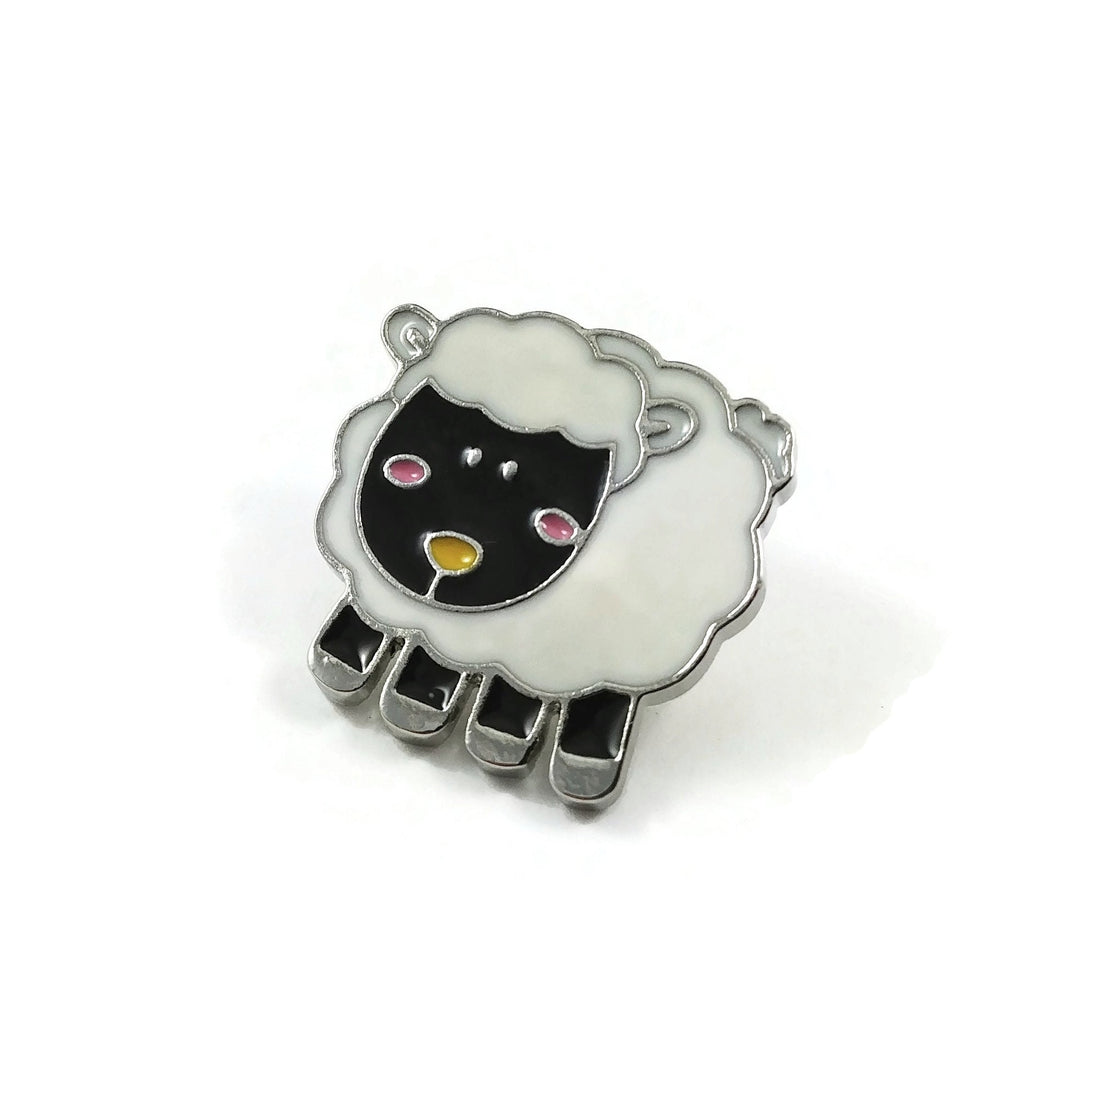 Black sheep enamel pin, Knit lover brooch, Cute gift for knitter